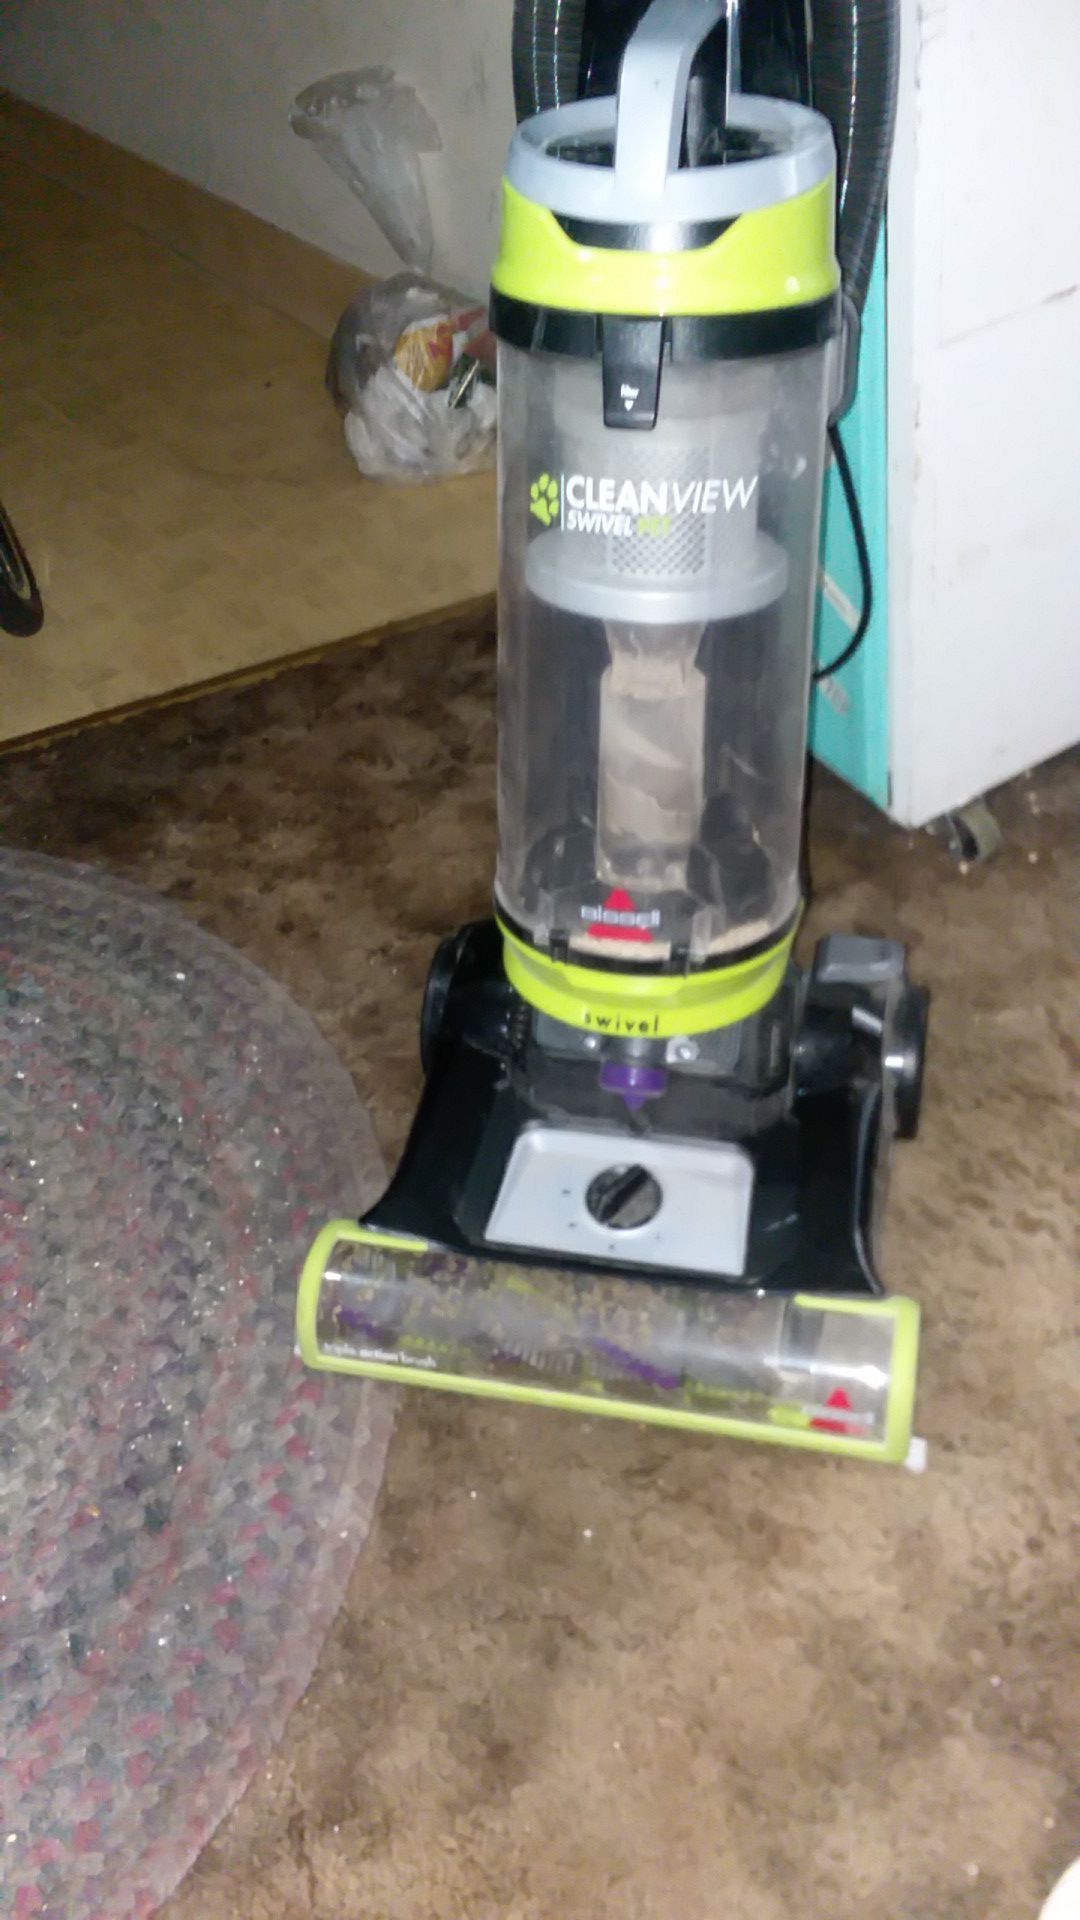 Bissell cleanview swivel pet vacuum